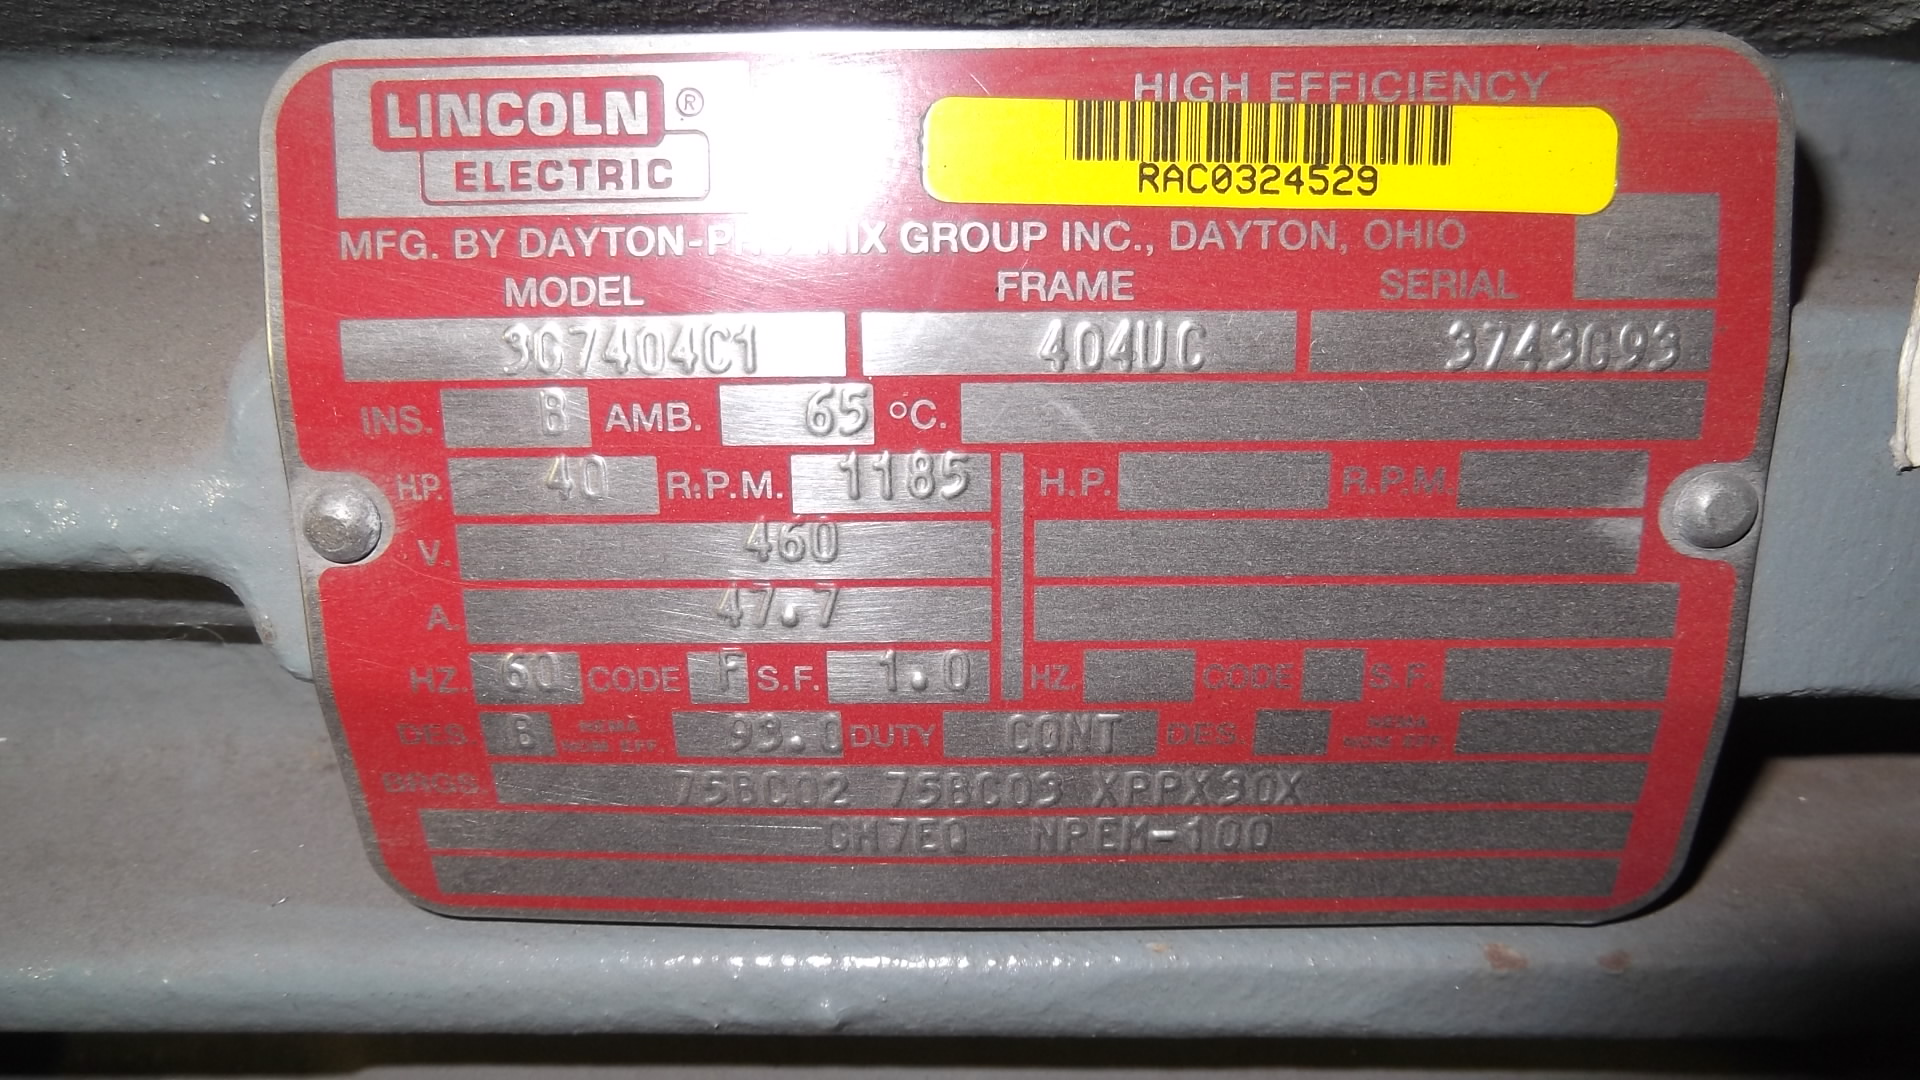 Lincoln 40 HP 1200 RPM 404UC Squirrel Cage Motors 66591